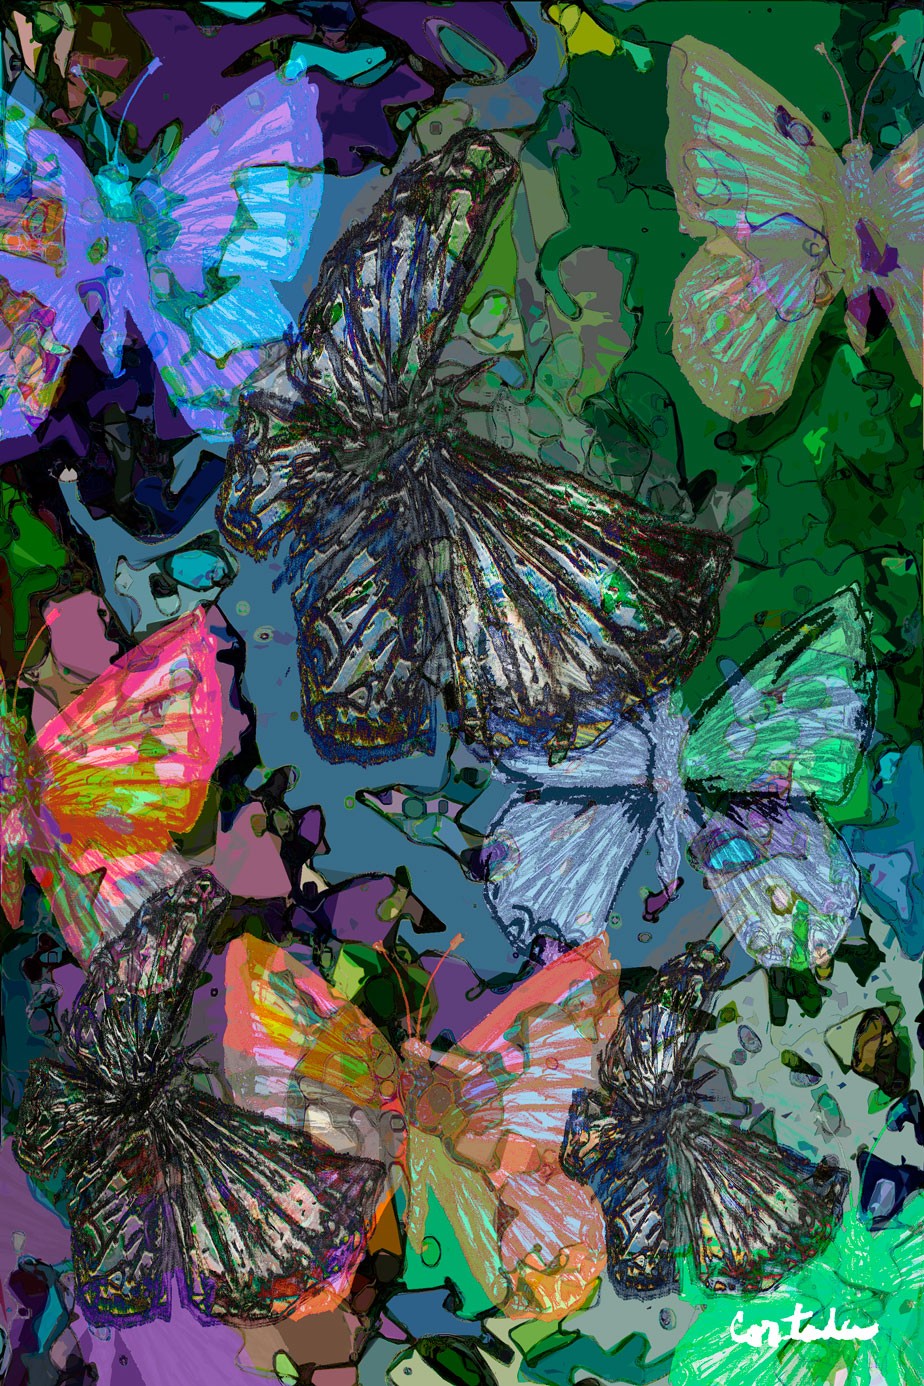 Xavier Cortada, “Florida is… Butterflies,” digital art, 2015. (www.florida-is.com)